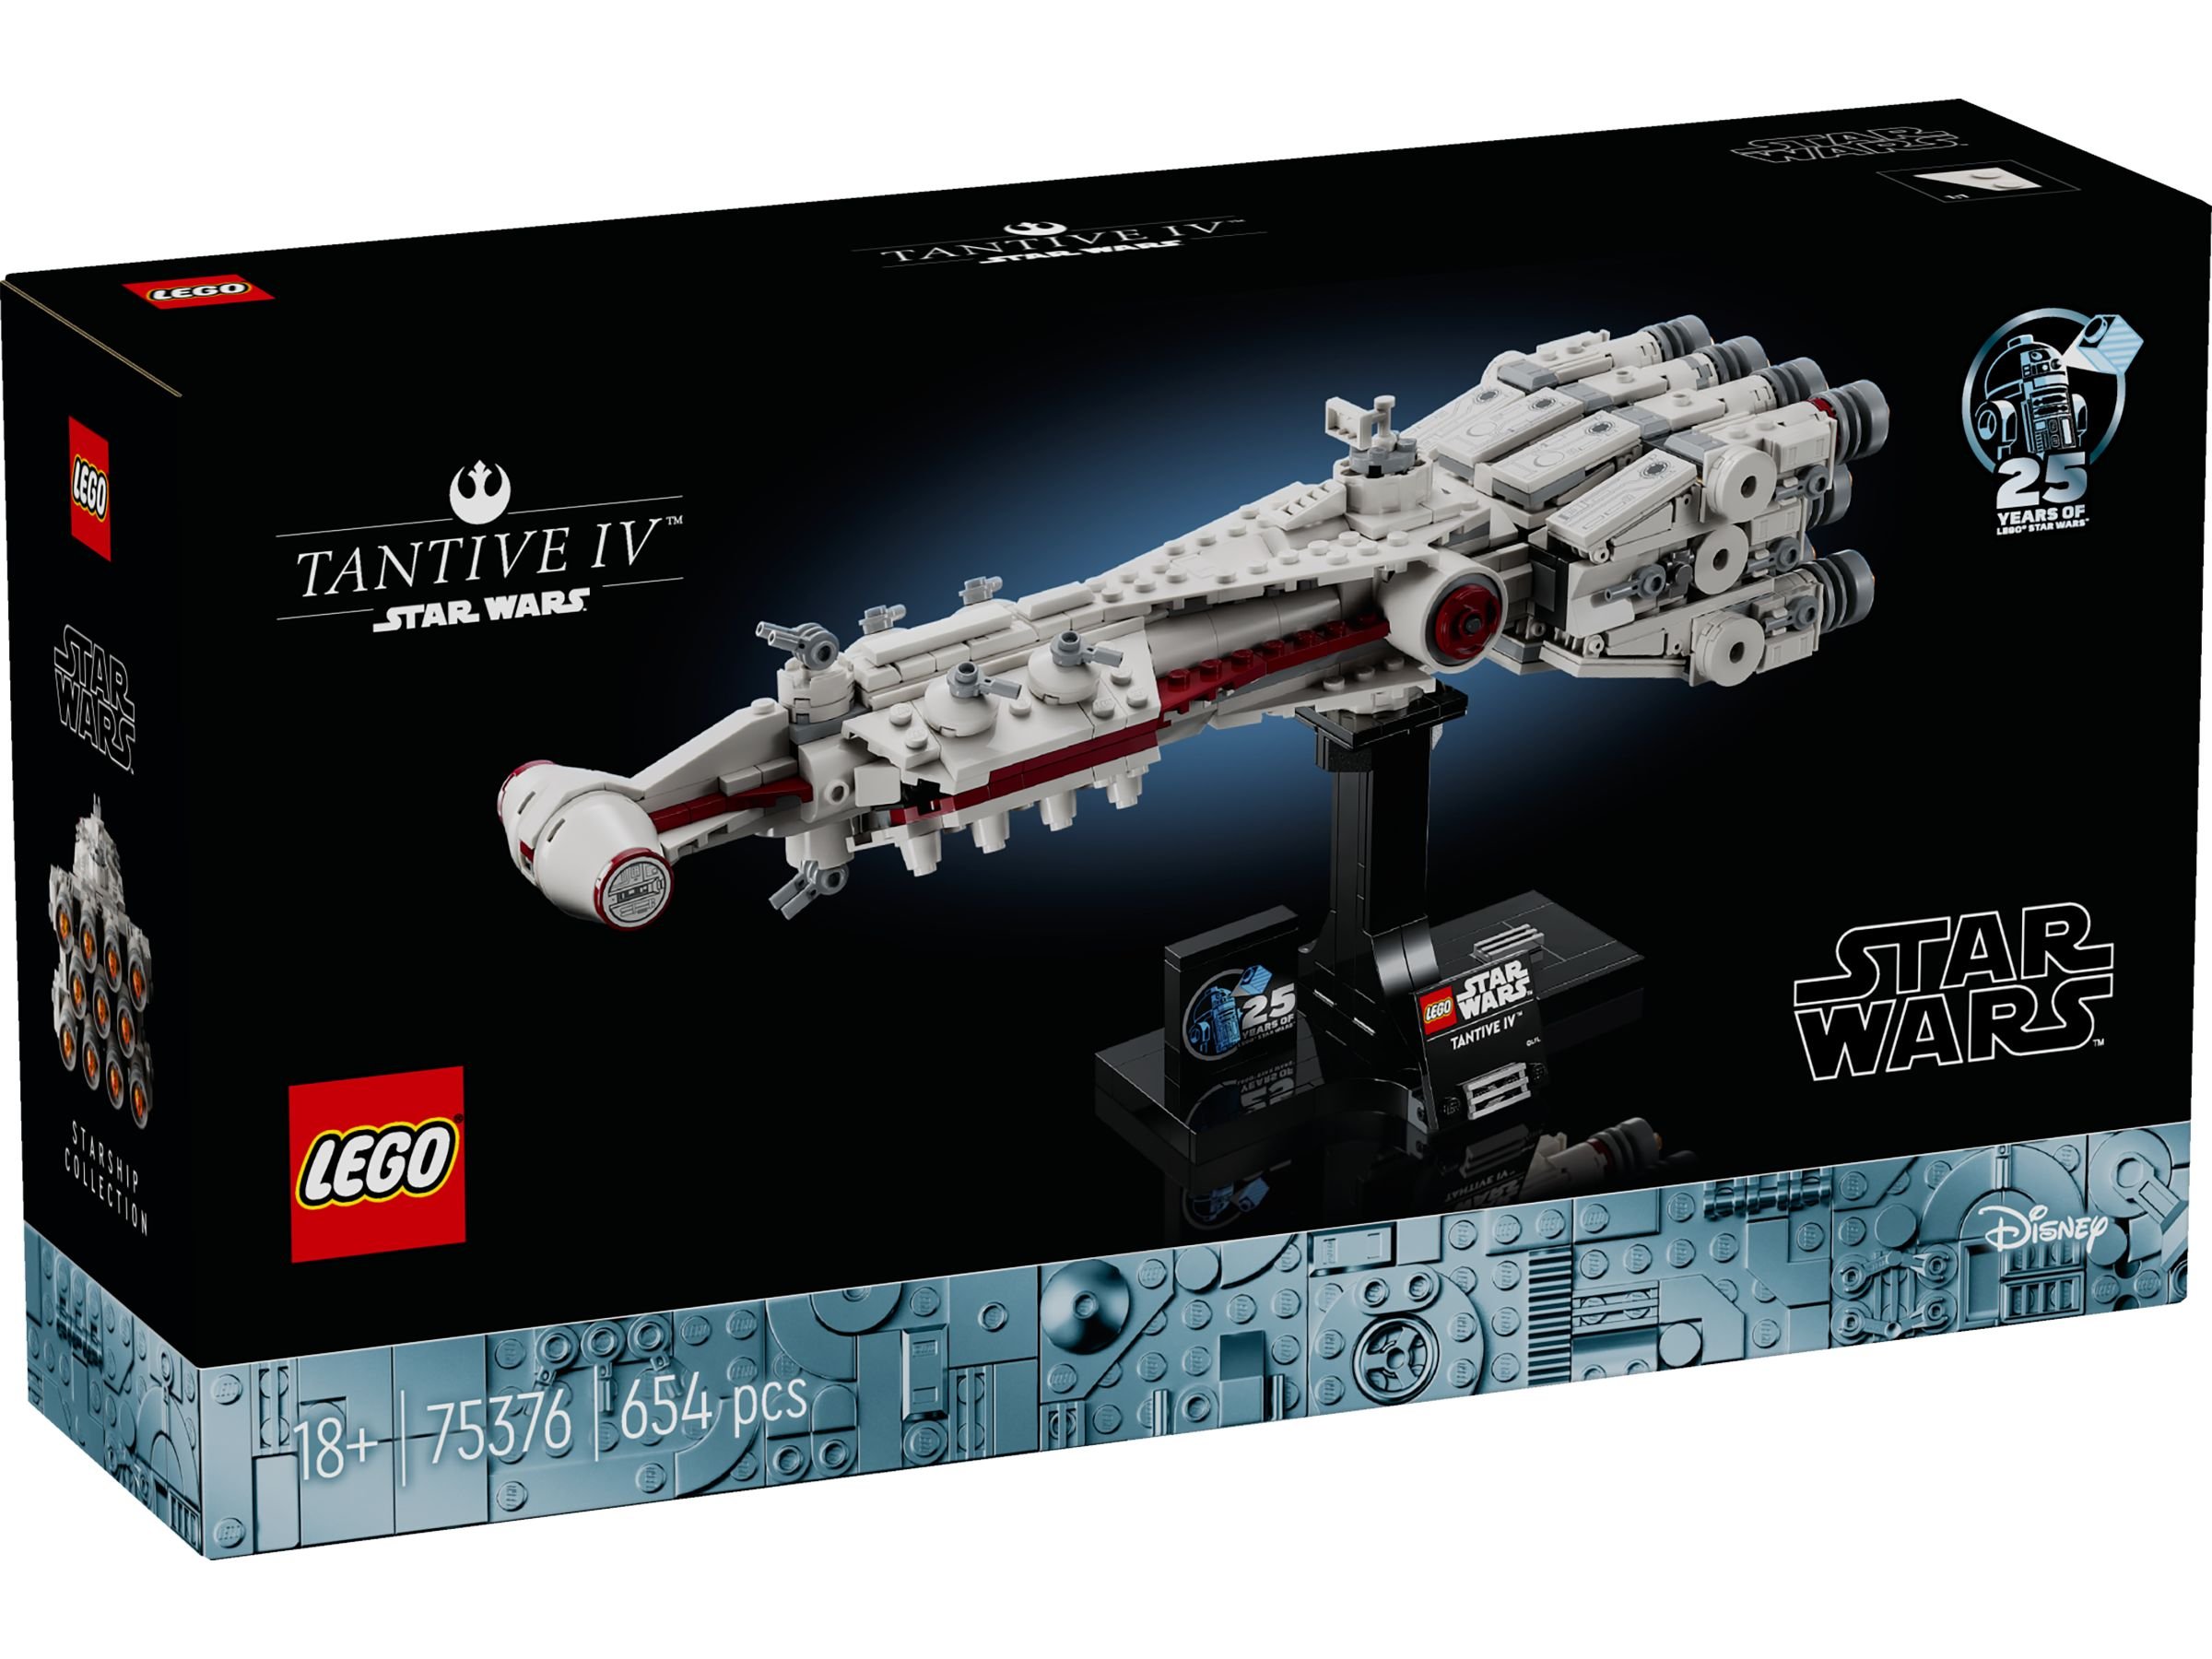 LEGO Star Wars 75376 Tantive IV™ LEGO_75376_Box1_v29.jpg